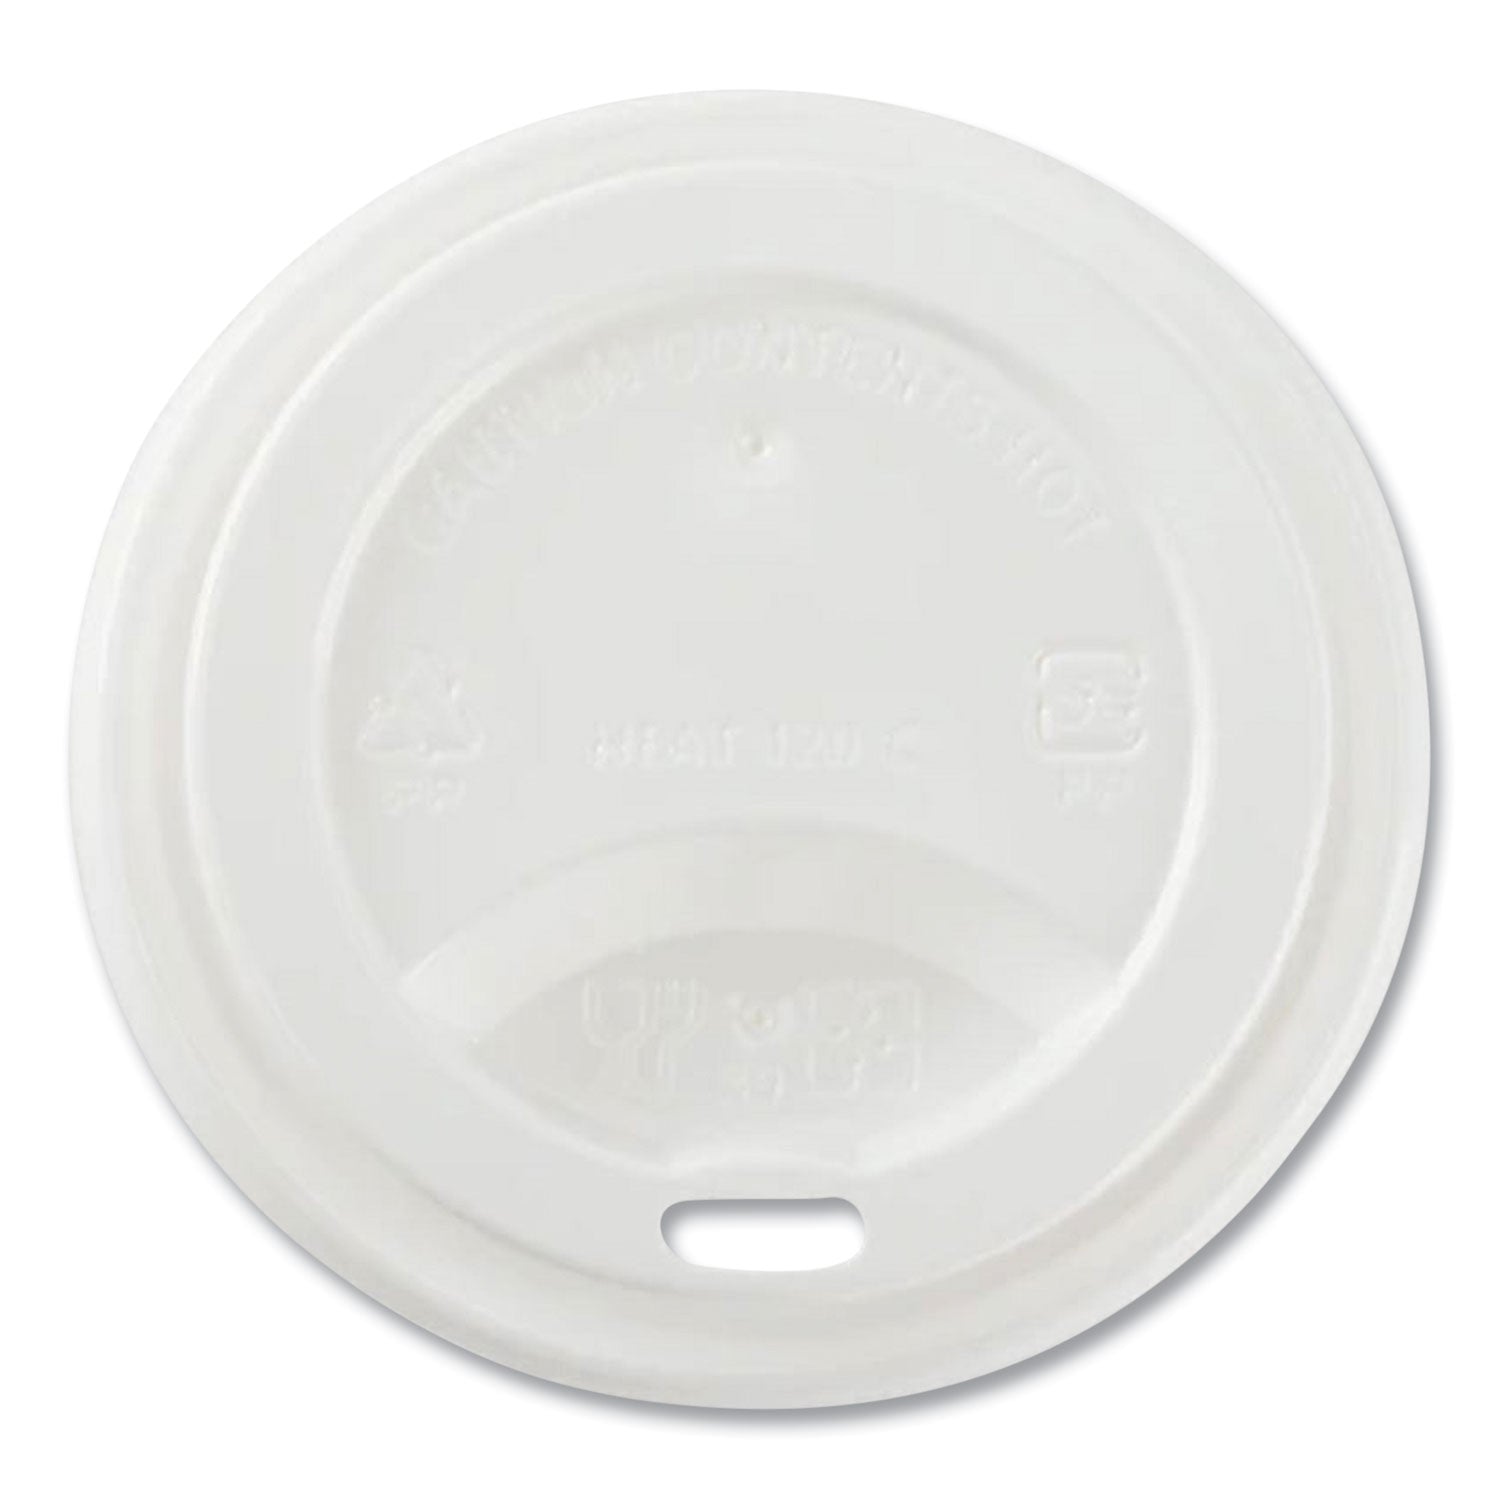 hot-cup-lids-fits-8-oz-paper-hot-cups-sipper-lid-white-1000-carton_krtckdl508wpp - 1